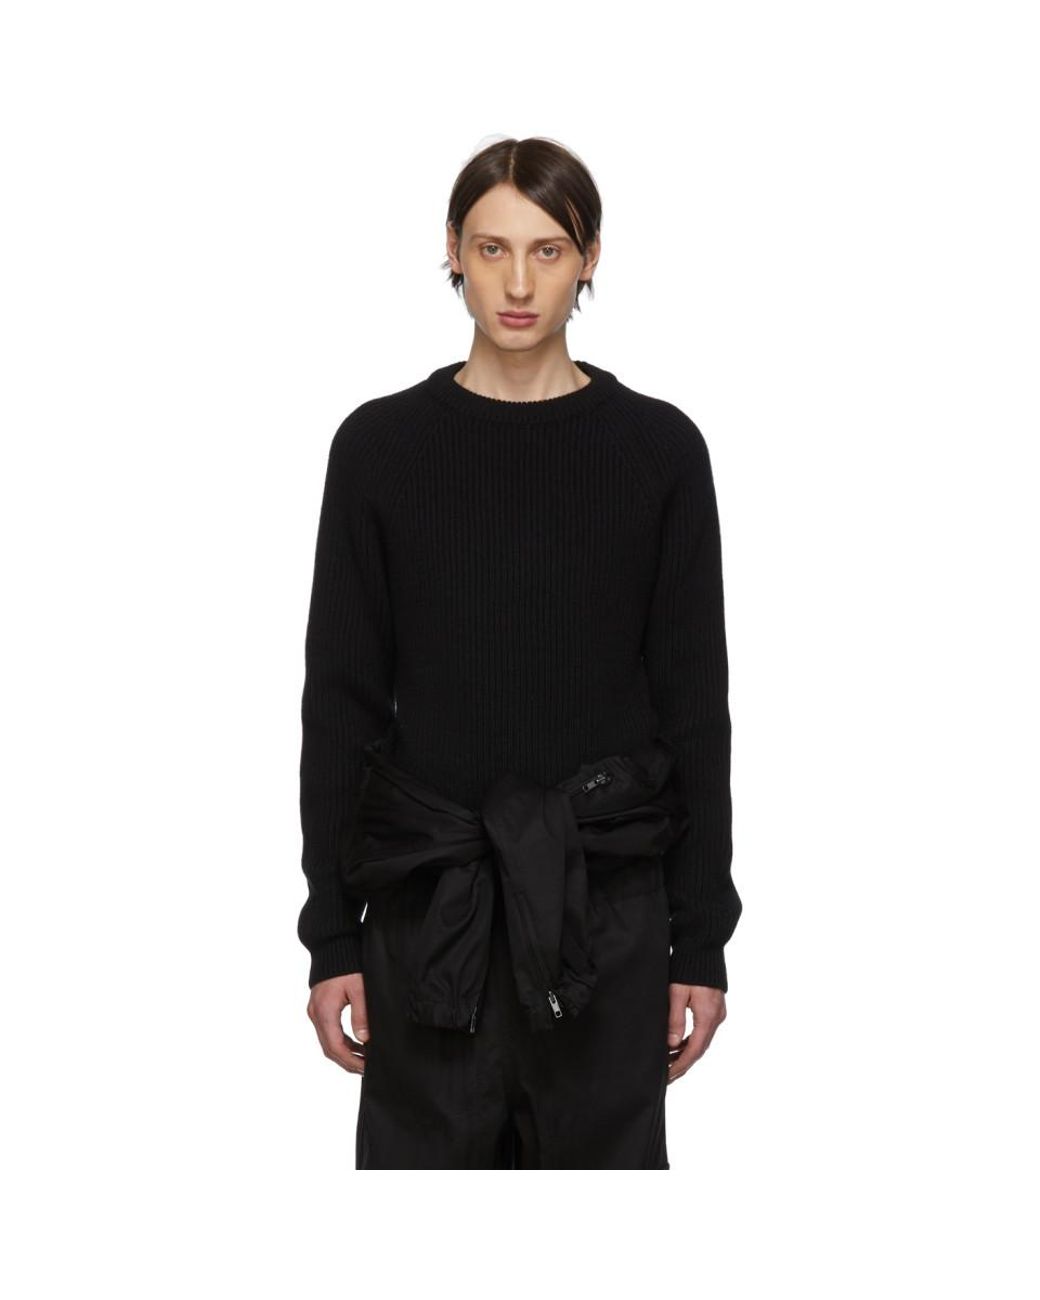 Maison Margiela Black Gauge 5 Sweater in Black for Men - Lyst